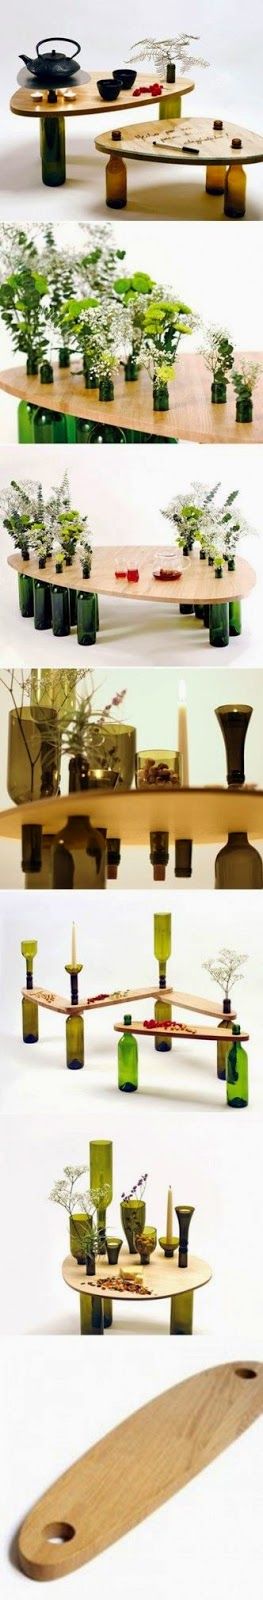 mesa de sobra de madeira e garrafas